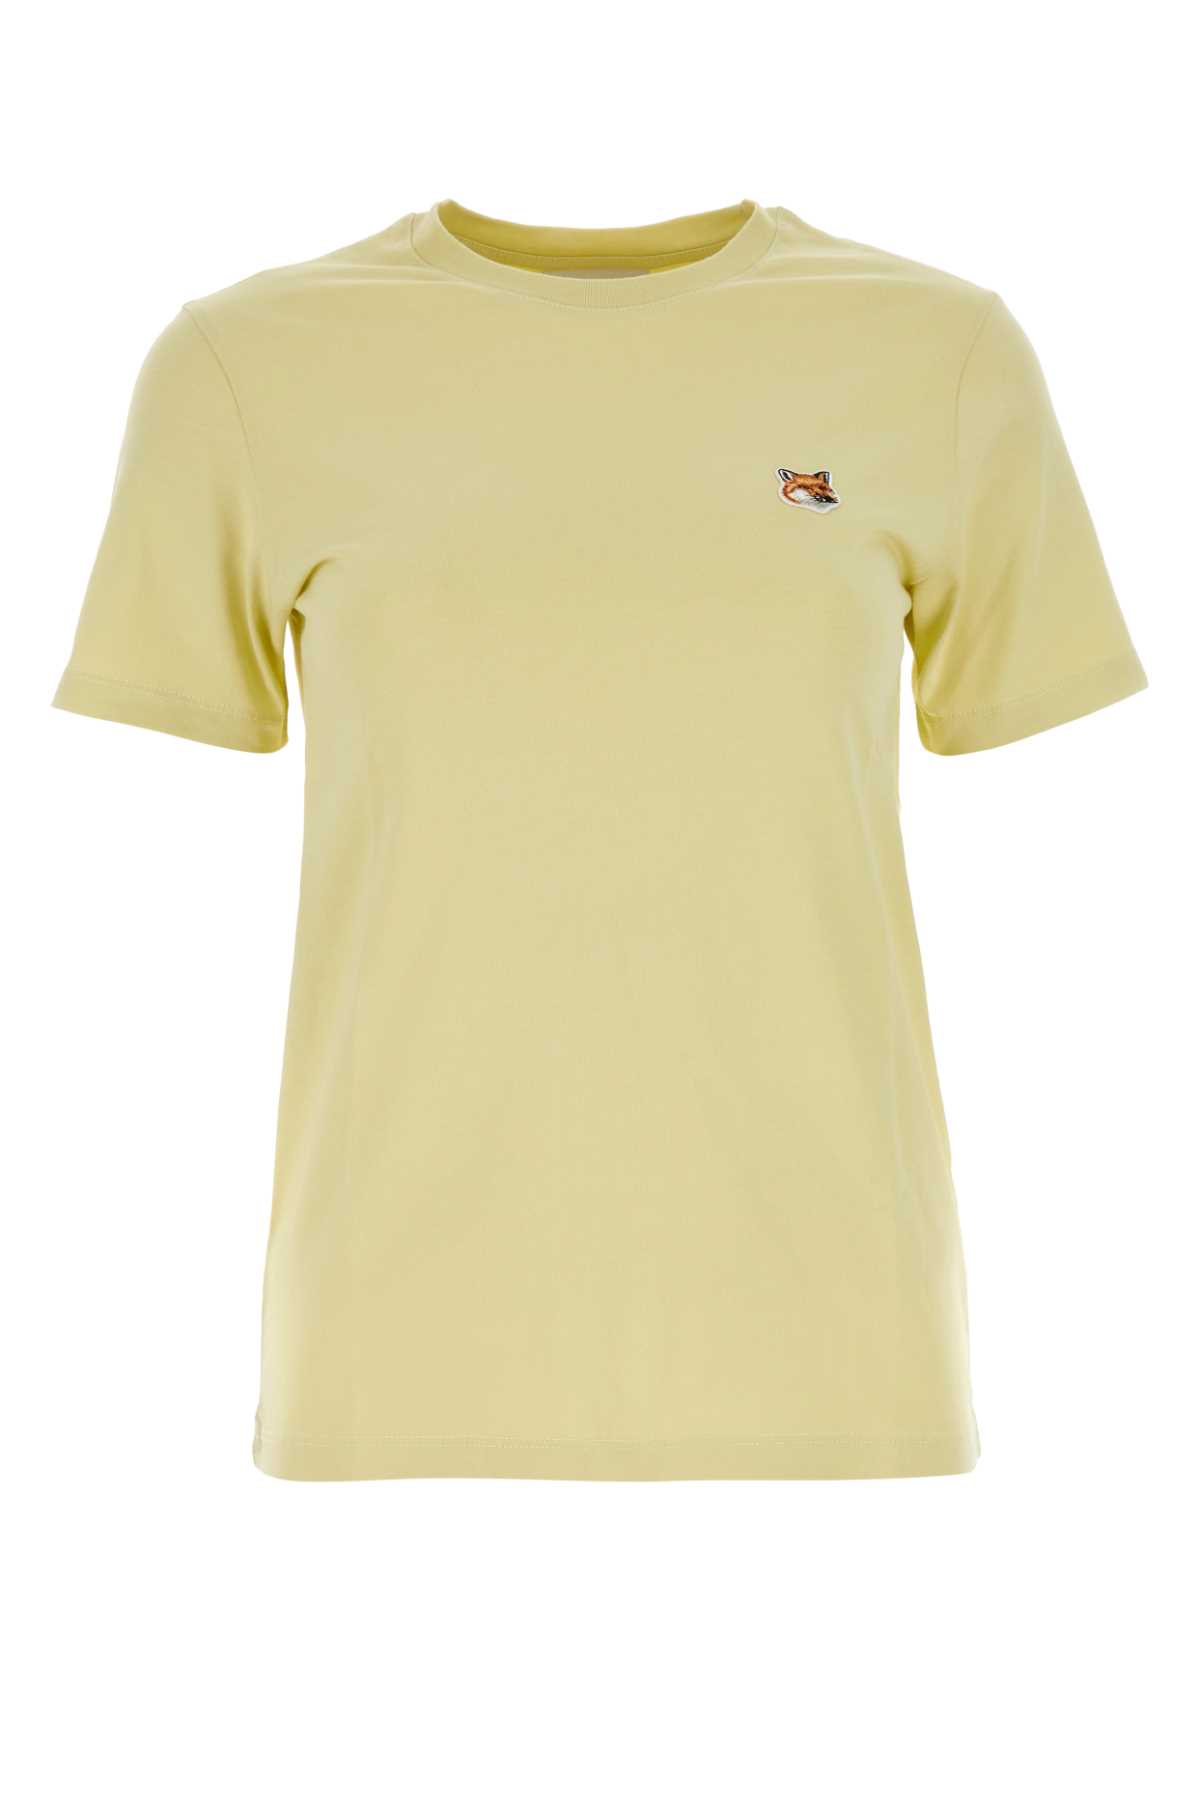 Maison Kitsuné Pastel Yellow Cotton T-shirt